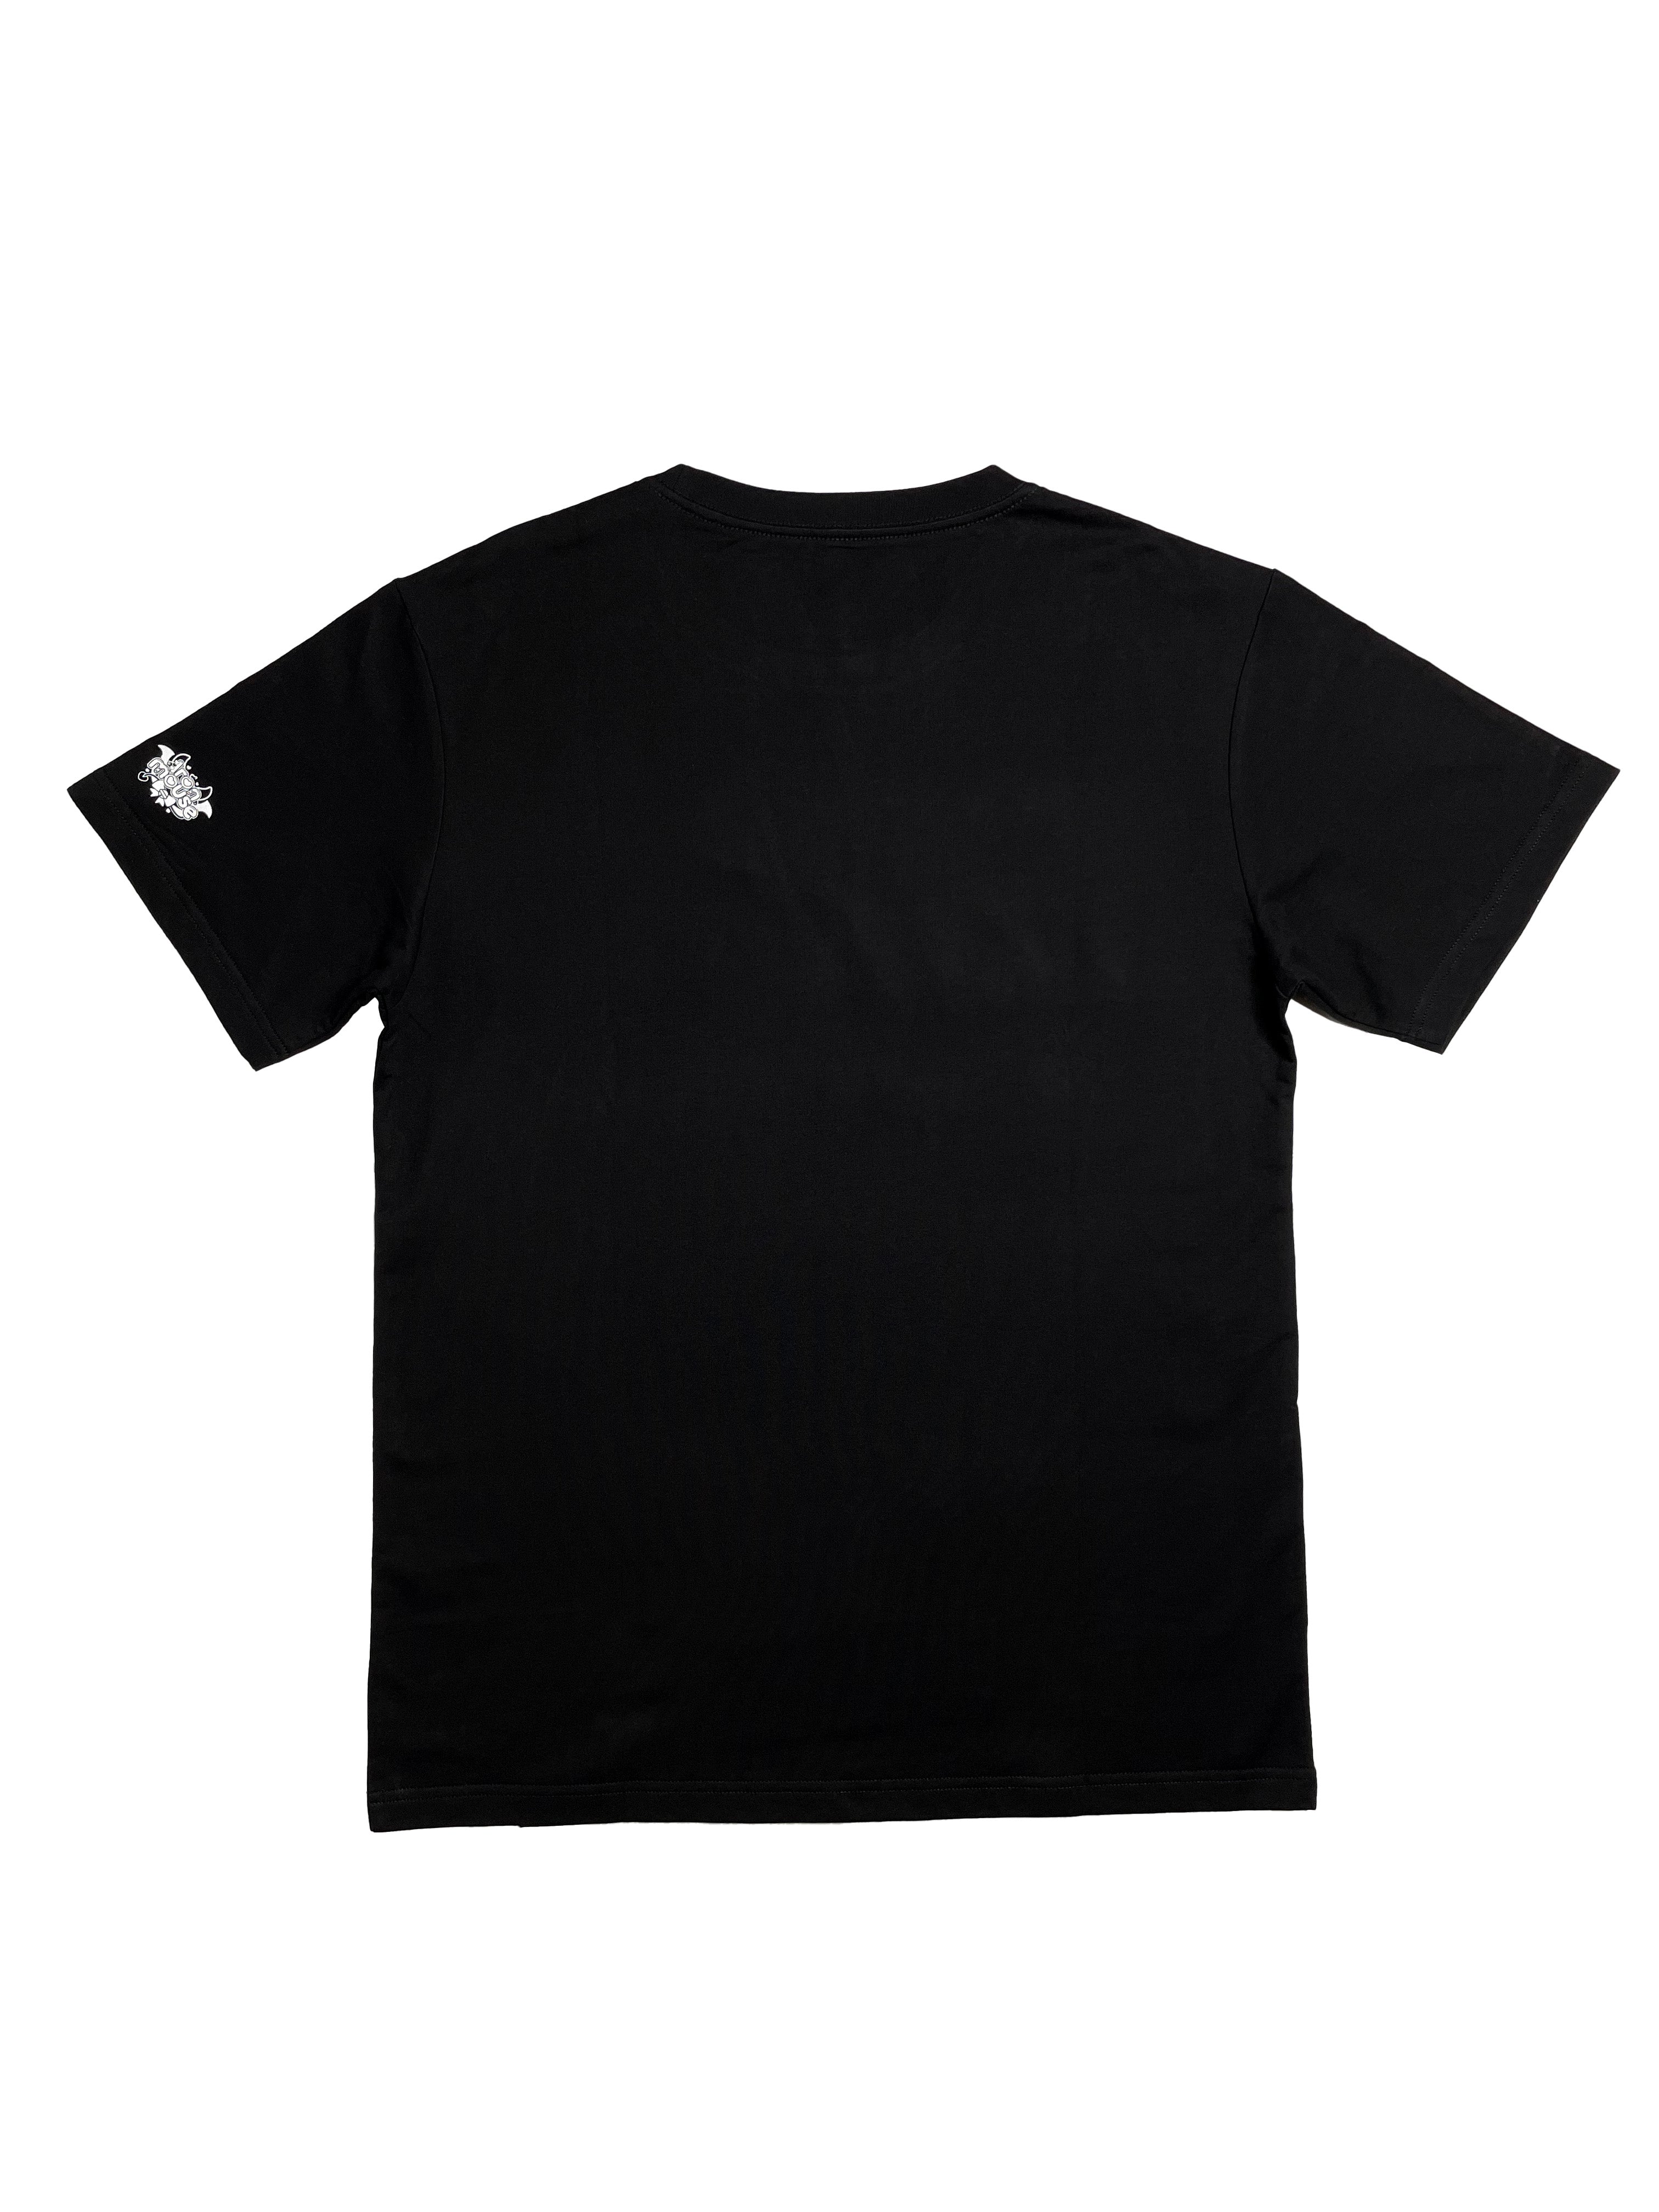 IC x Ironmouse Tshirt (Black)